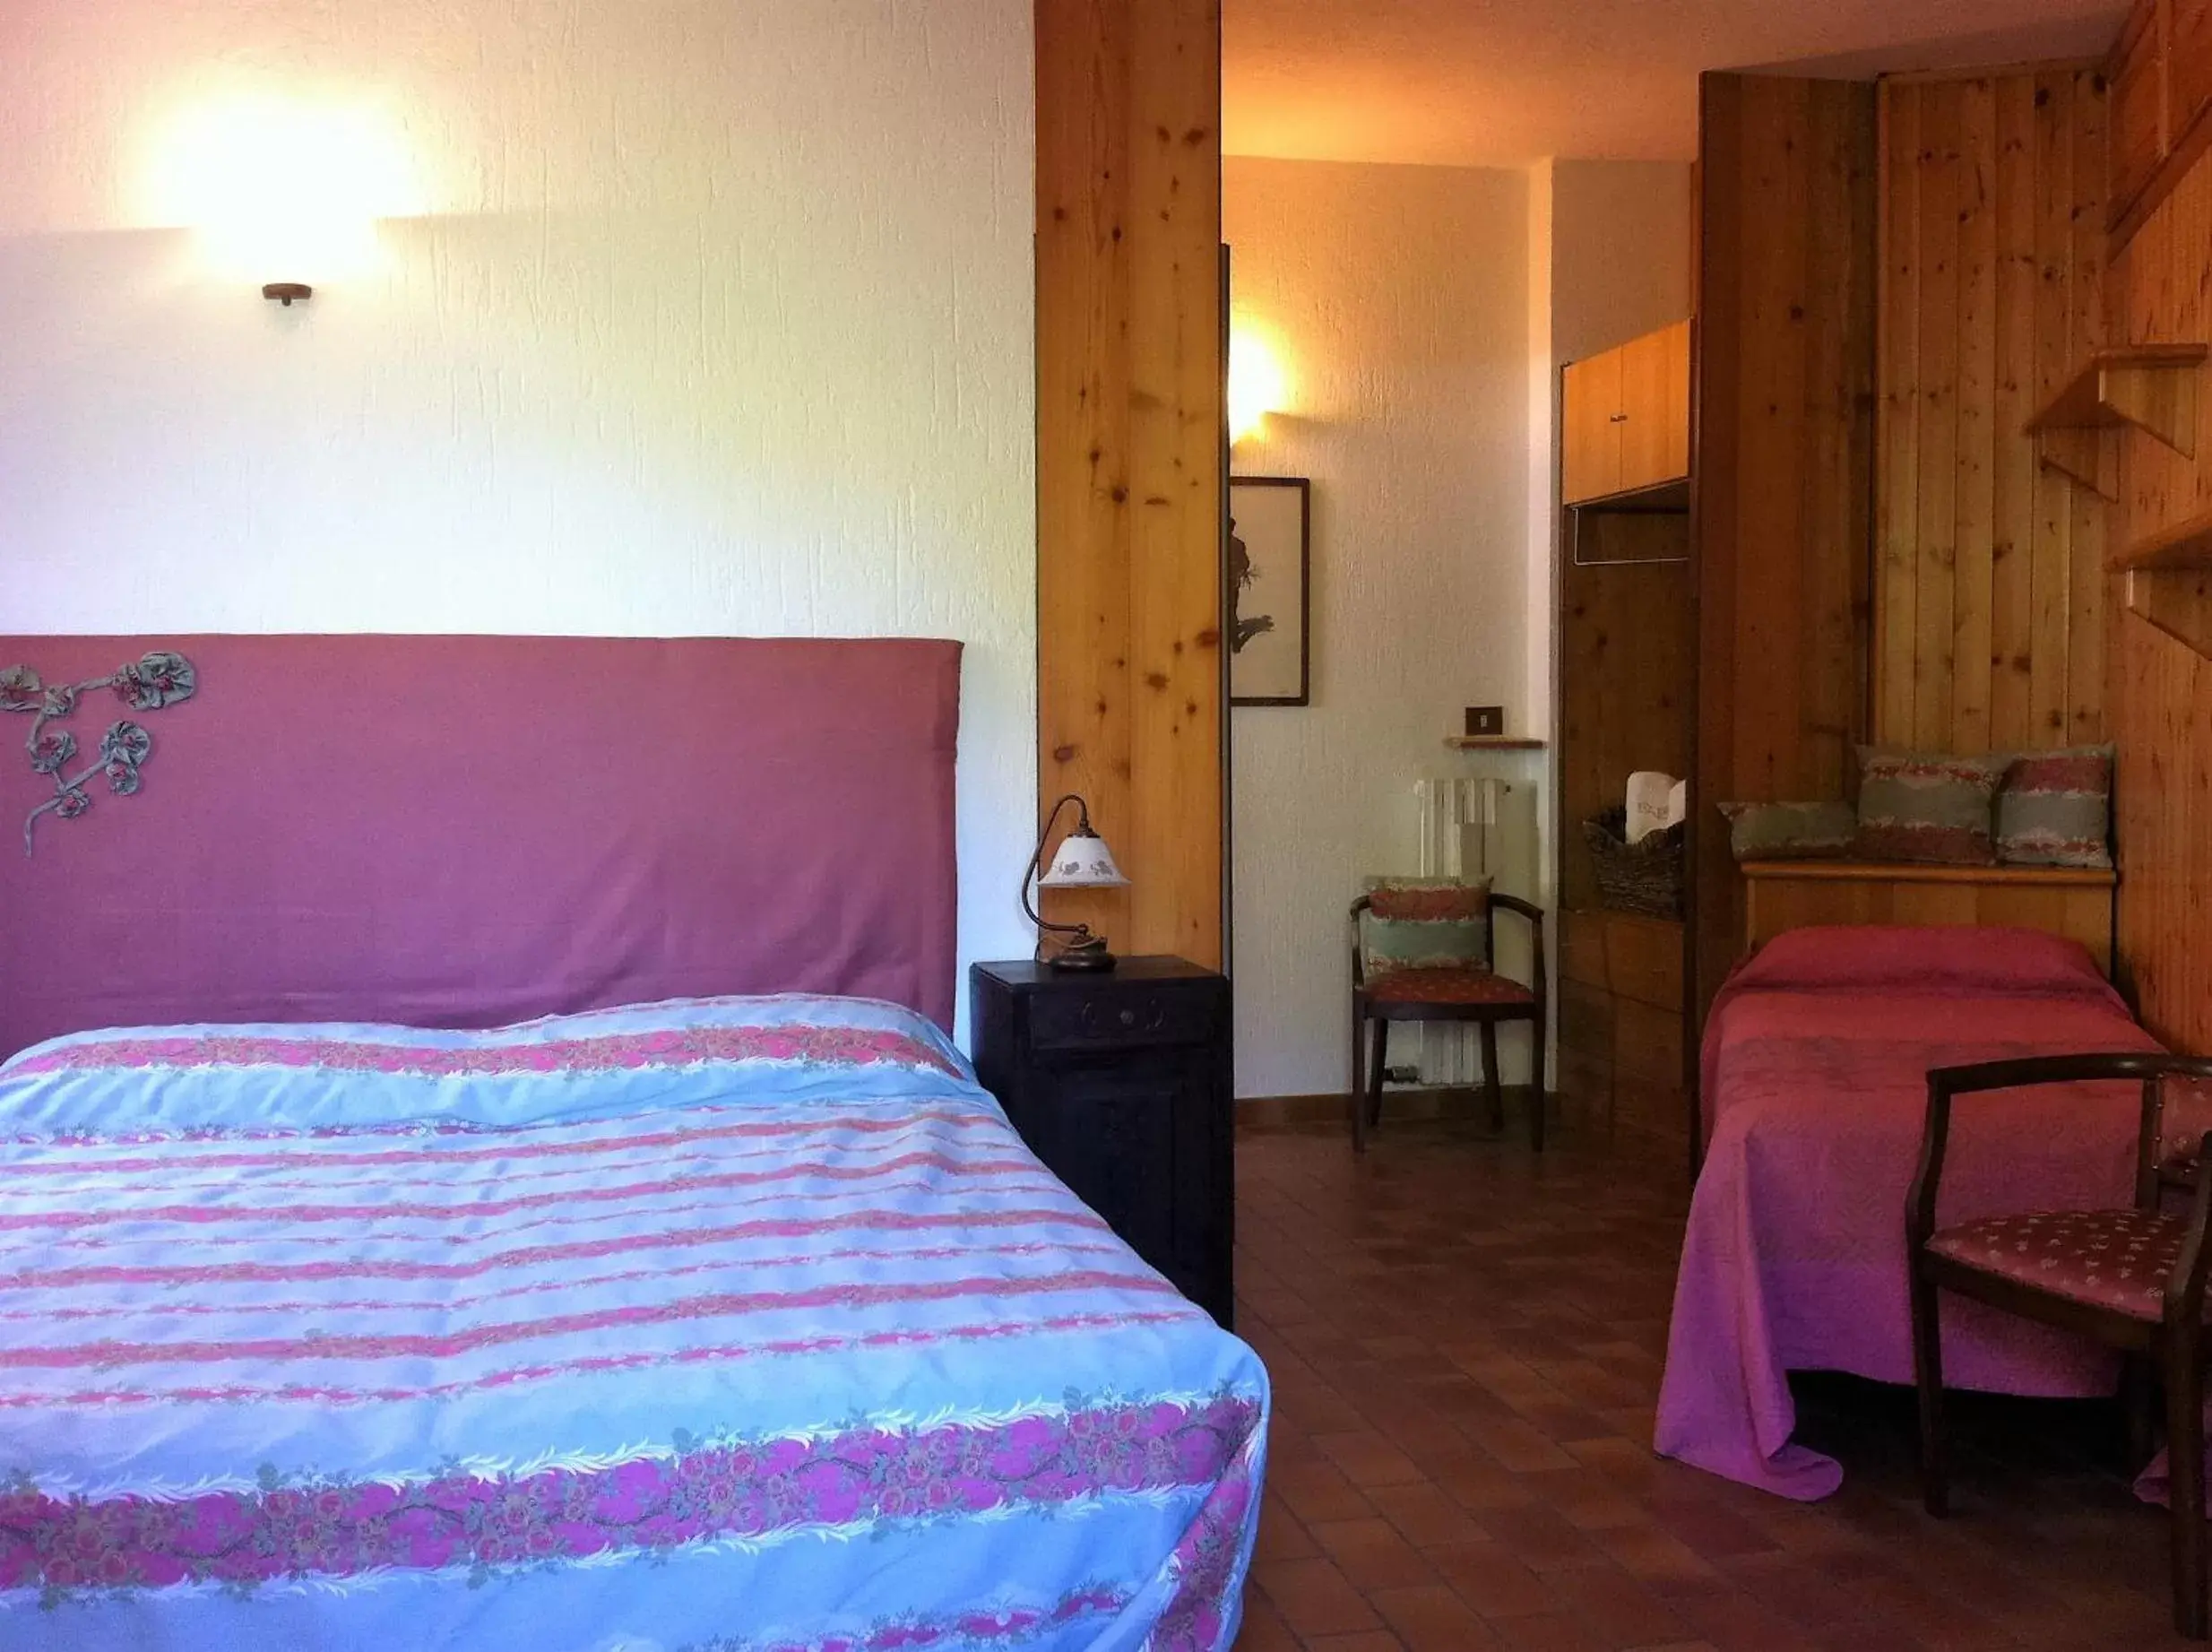 Bedroom, Room Photo in Le Lierre